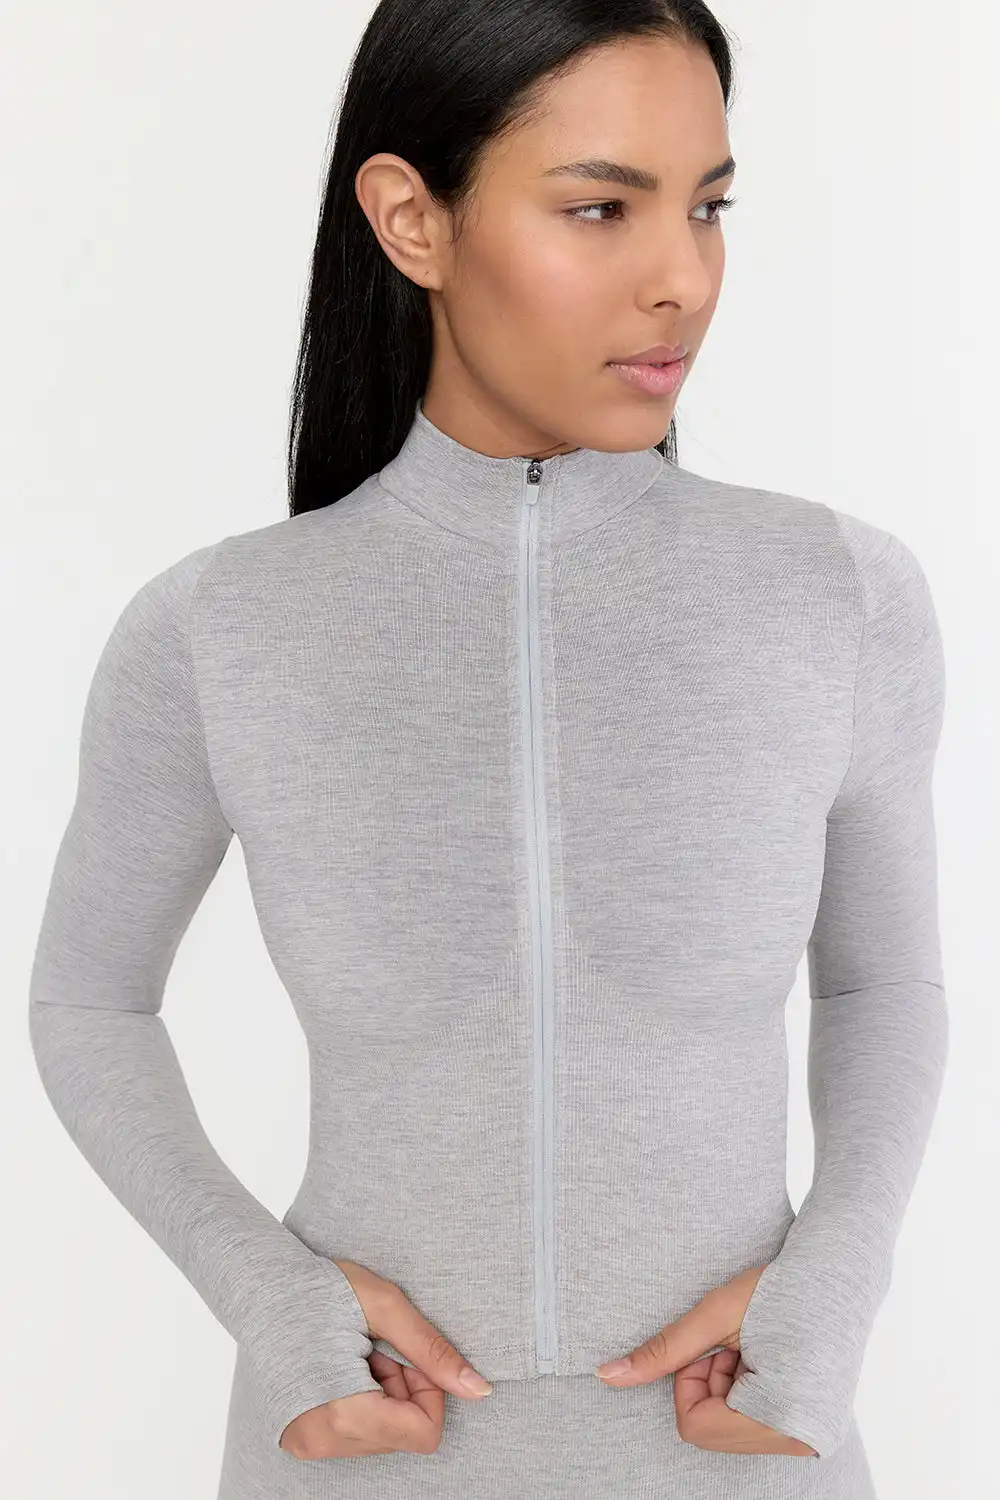 Wholesale Women Activewear Thumbhole Yoga Jackets Nylon Soft Ribbed Tops Seamless Slim Fit Zip Up Long Sleeve Fitness Jacket